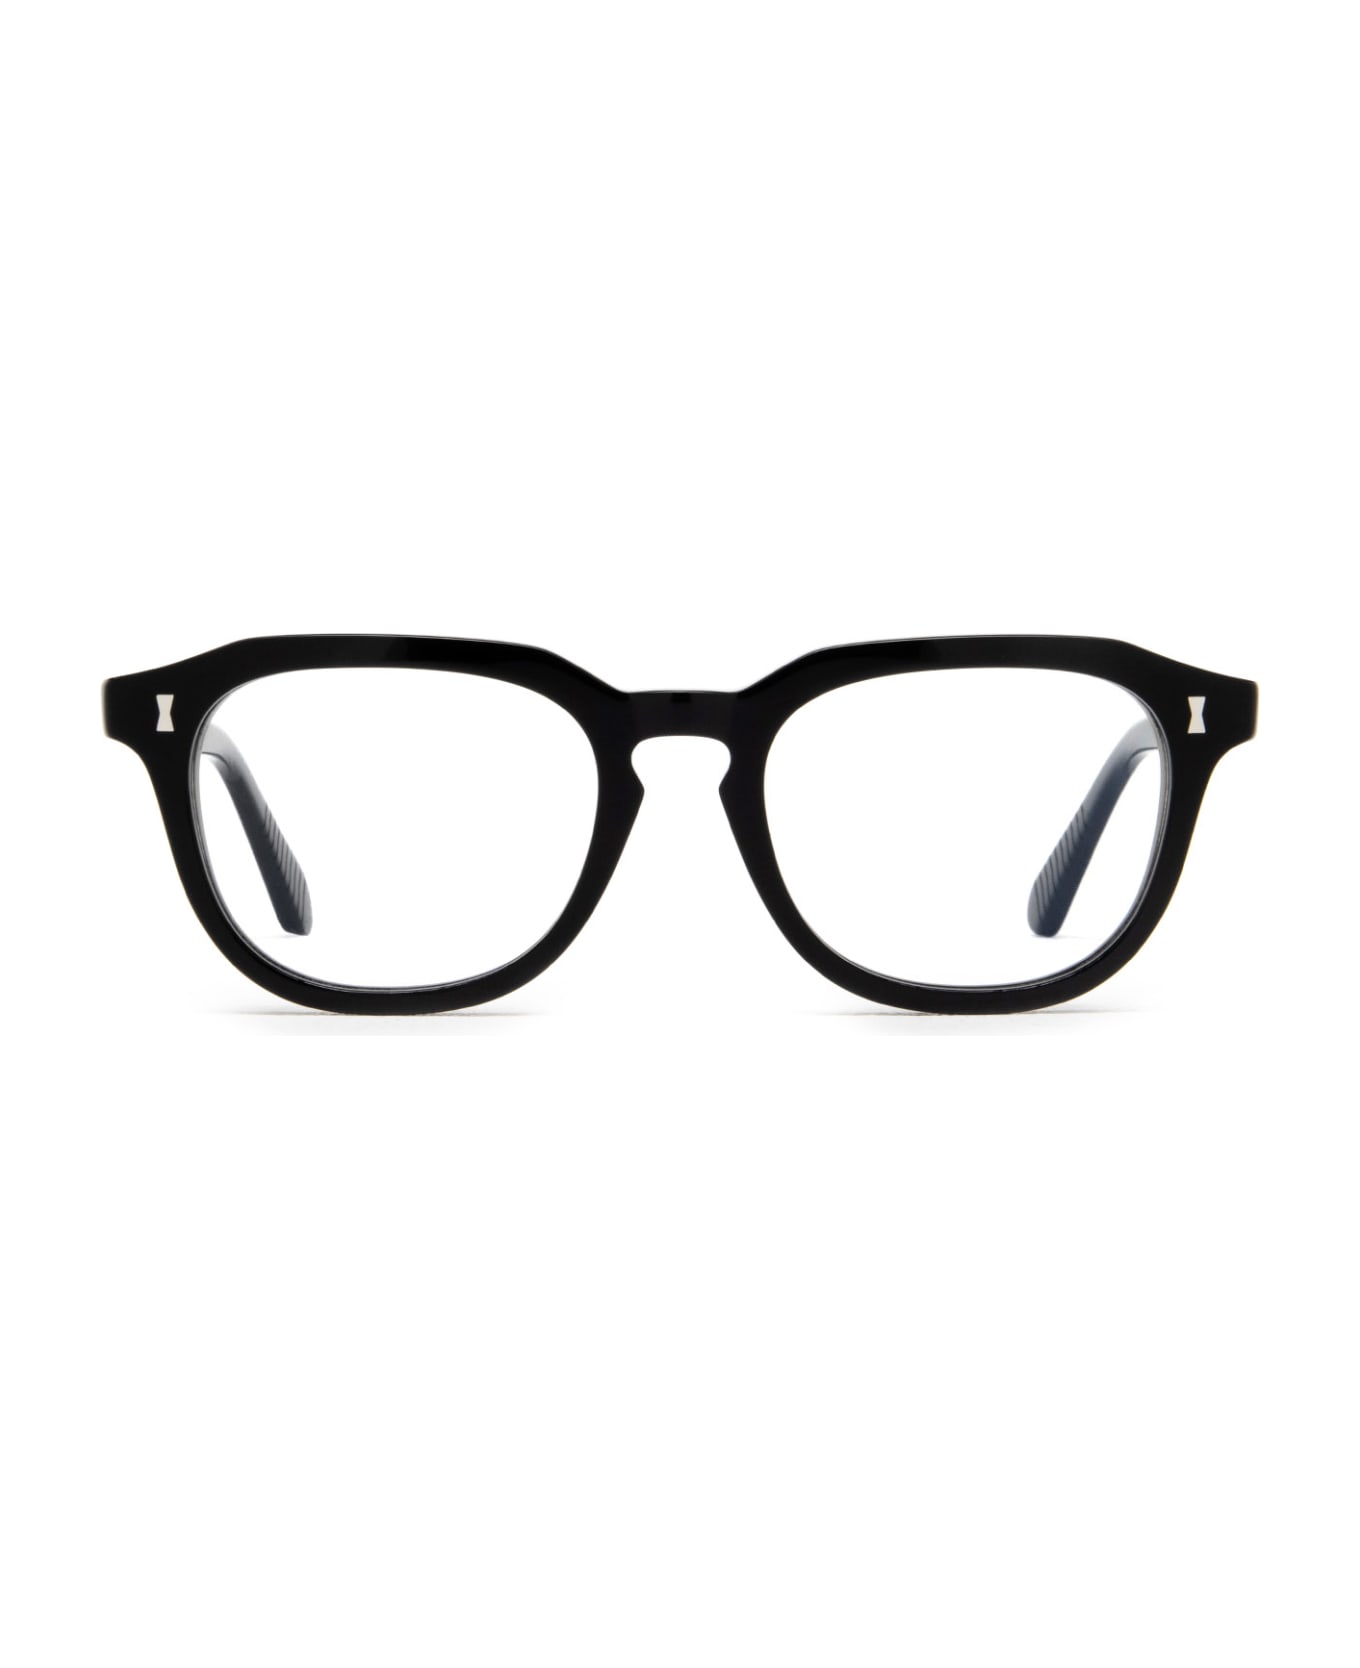 Cubitts Bunning Black Glasses - Black